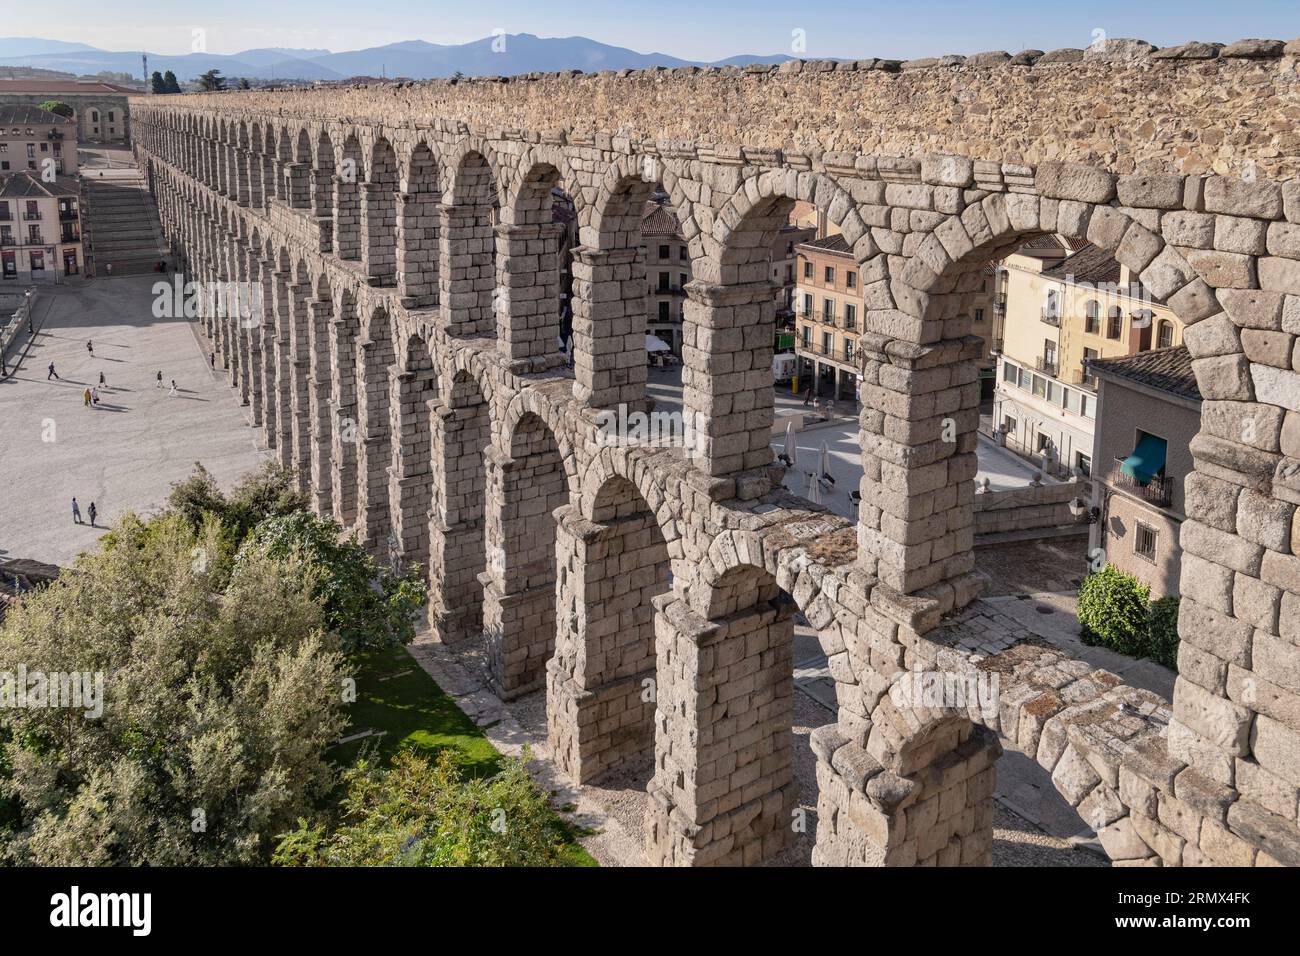 Spain, Castile and Leon, Segovia, Vista from the Postigo del Consuelo Mirador of the Aqueduct of Segovia, a Roman aqueduct with 167 arches built aroun Stock Photo